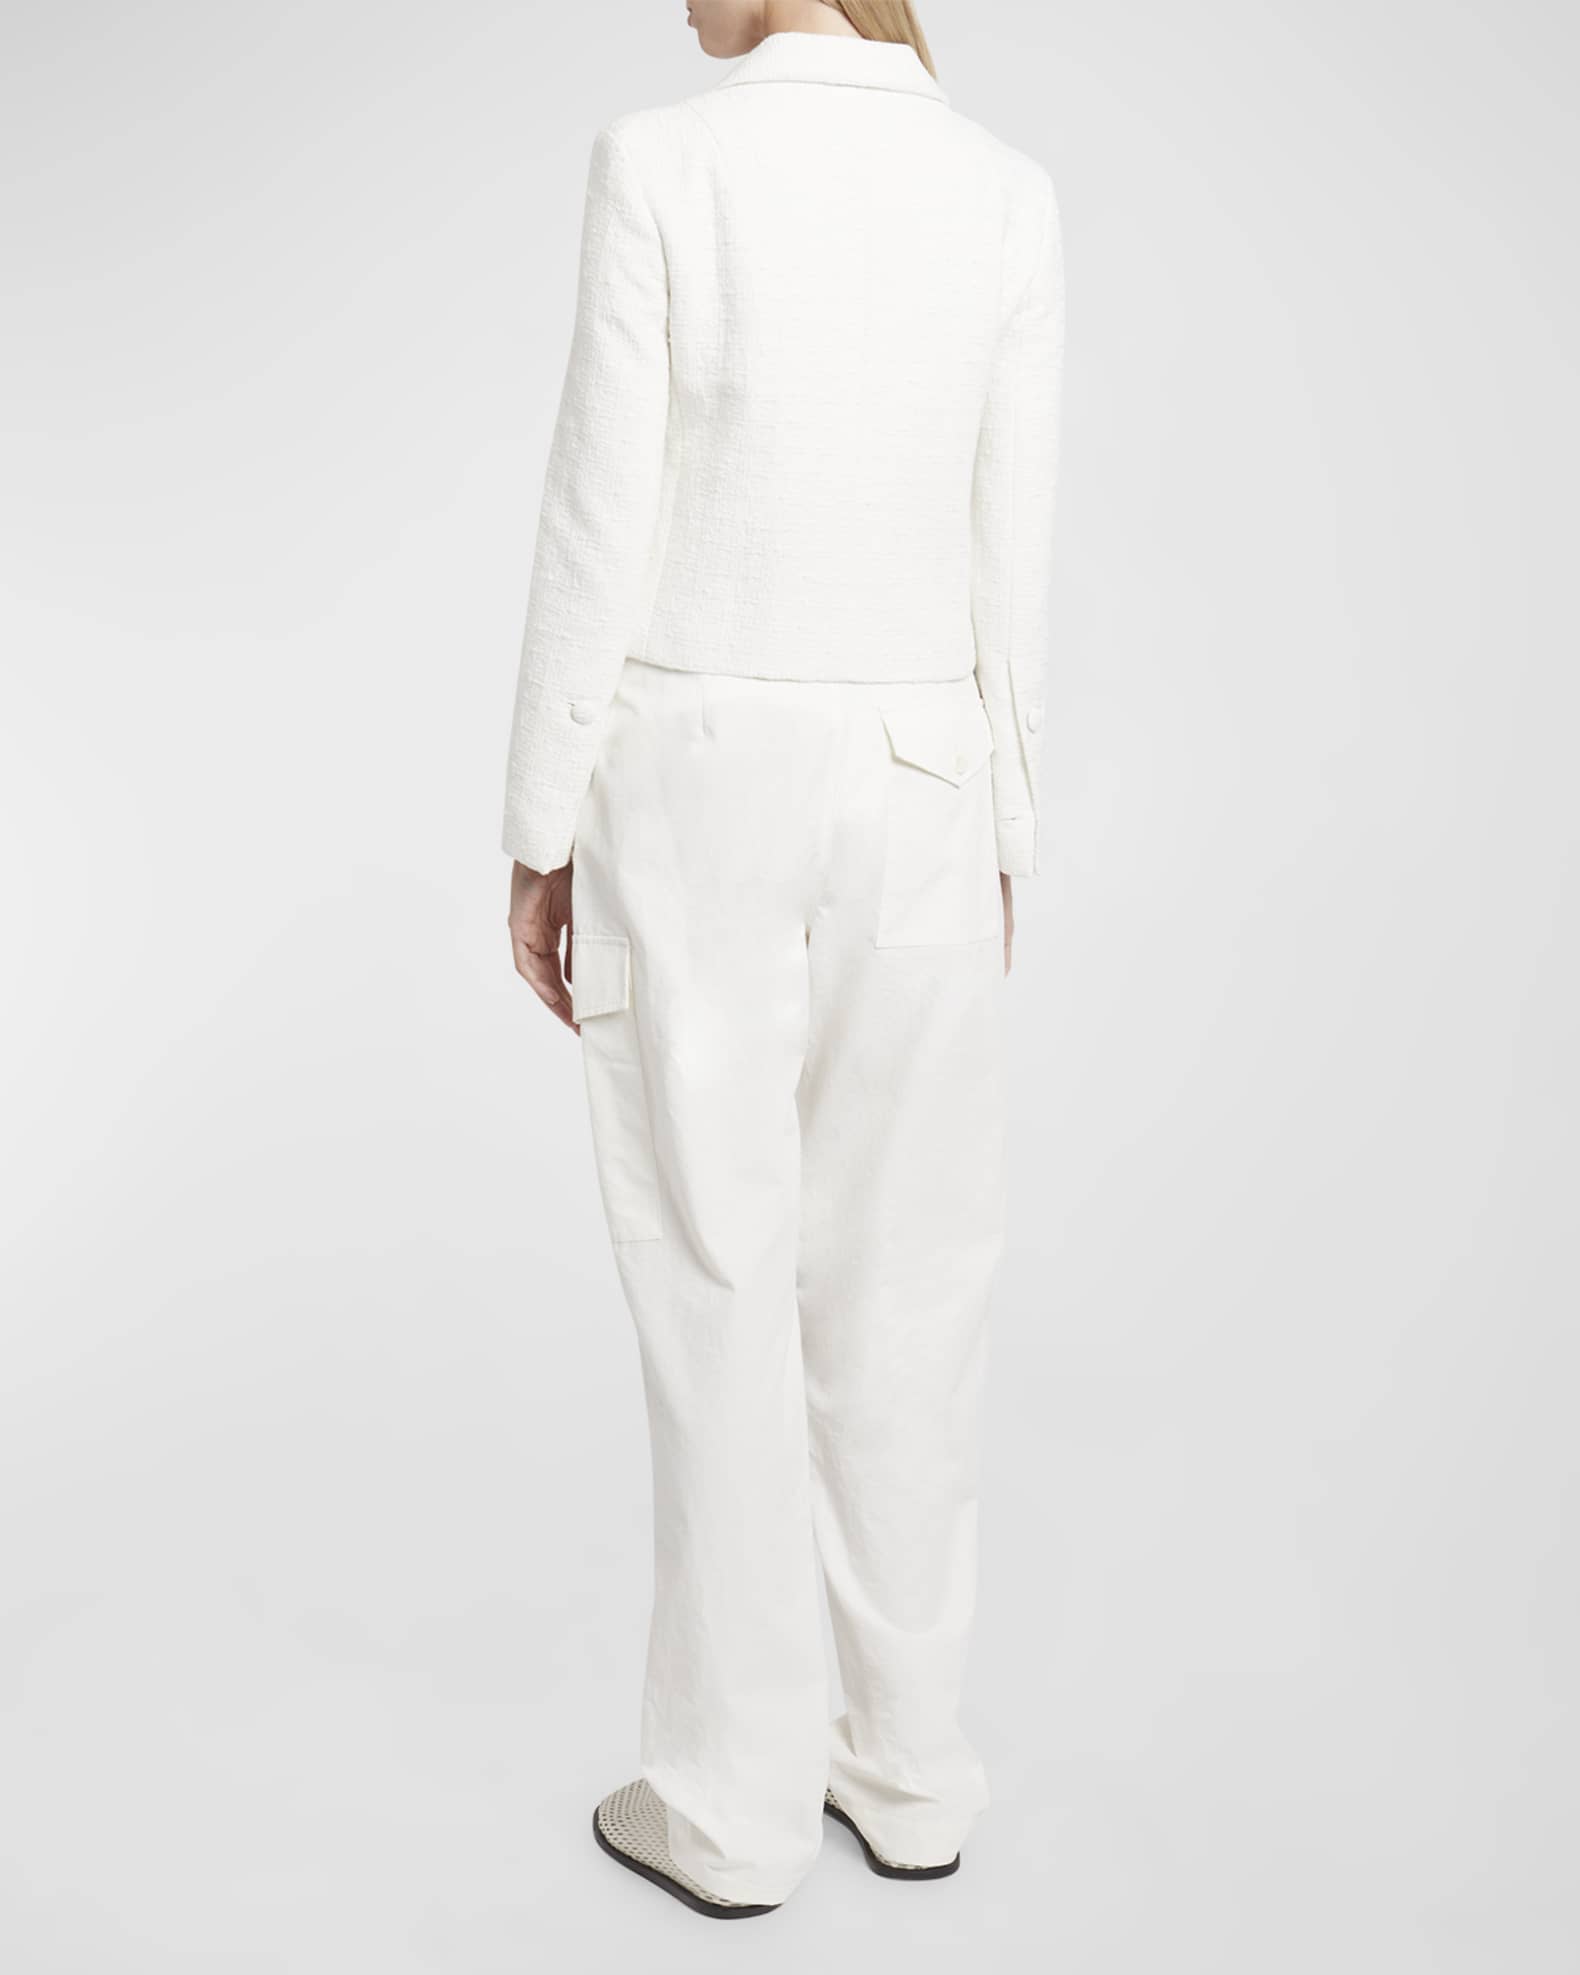 Proenza Schouler White Label Quinn tweed jacket